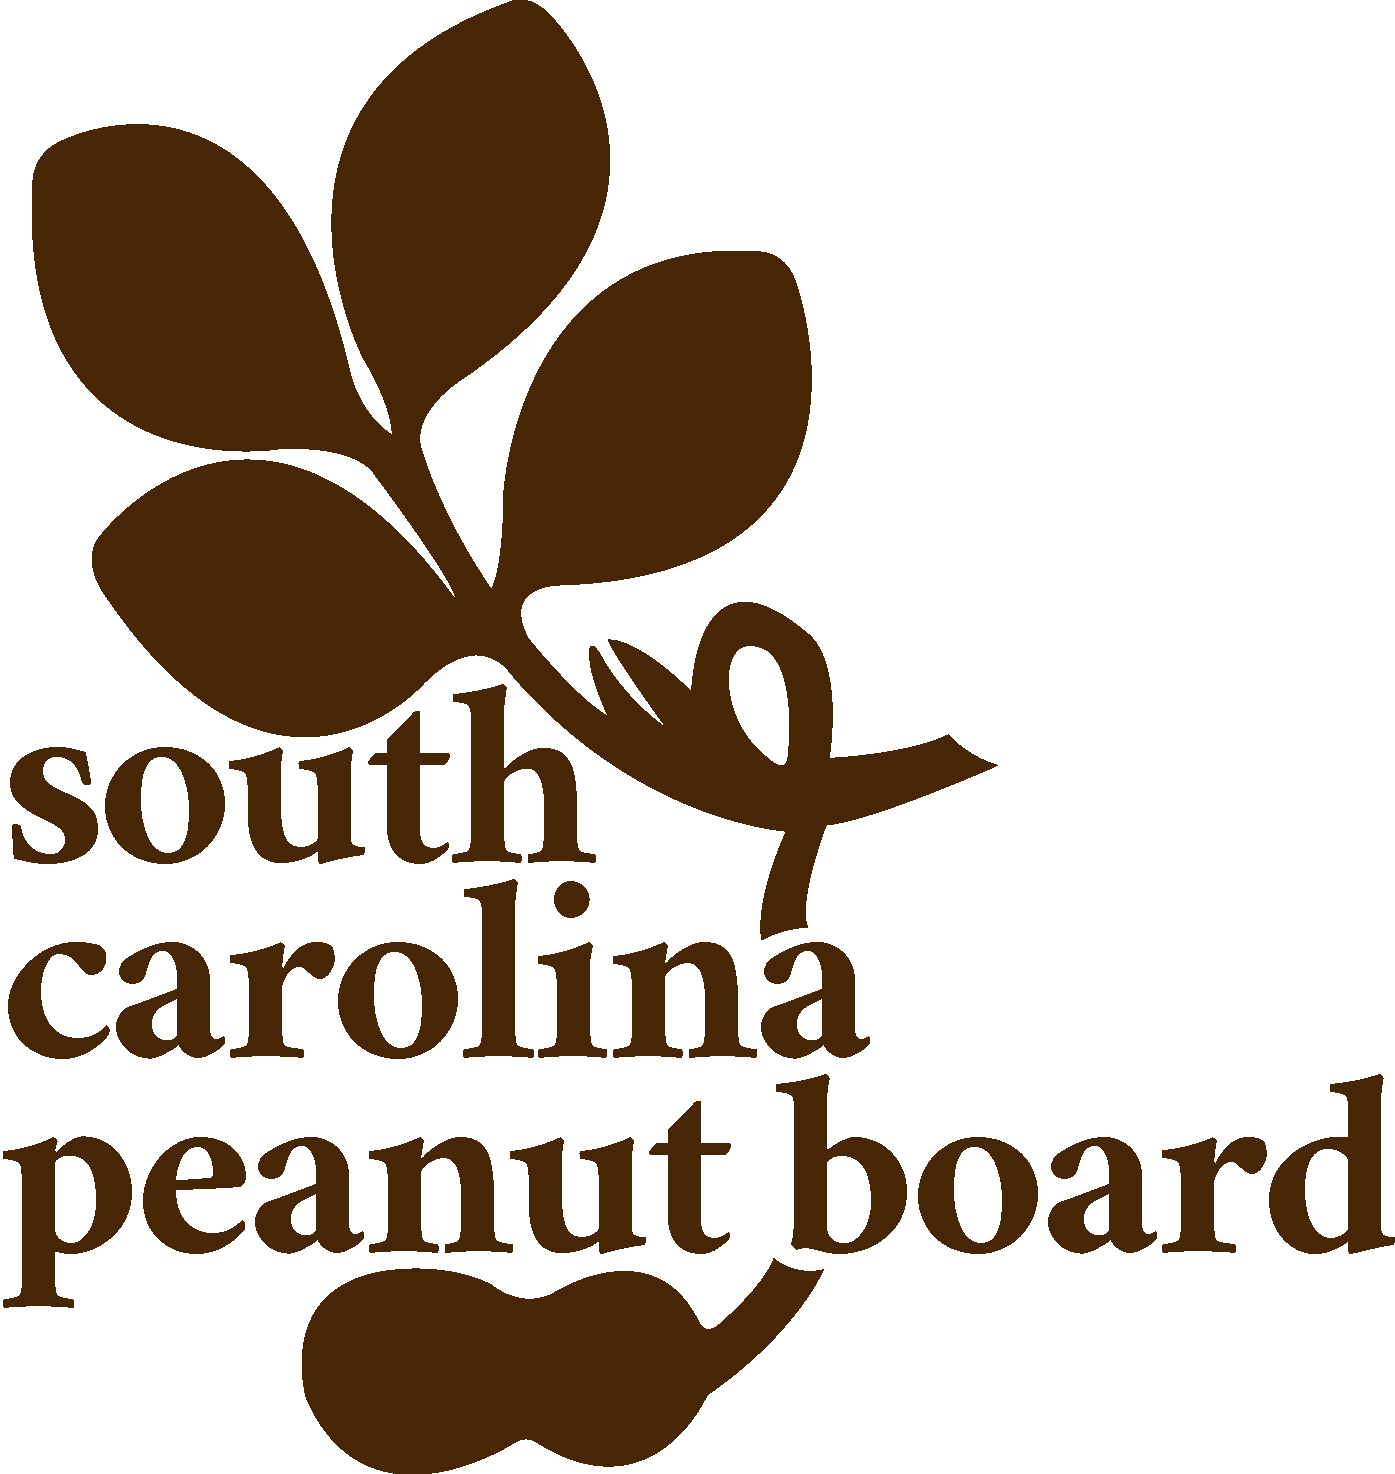 South Carolina Peanut Board